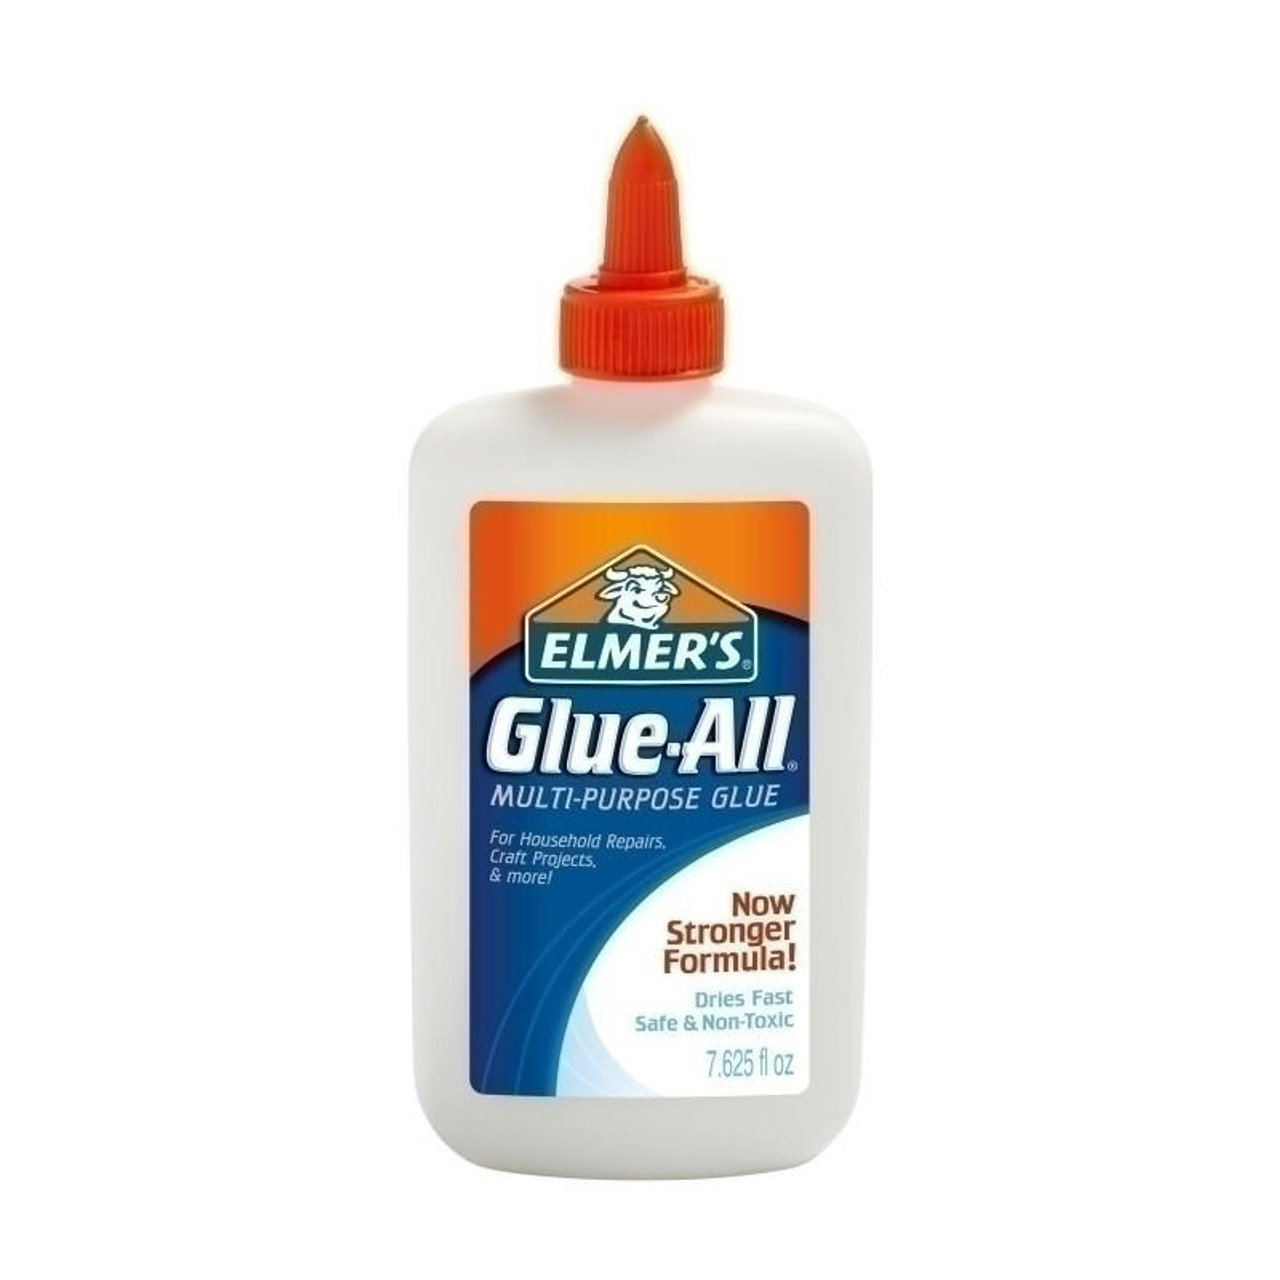 Elmer's School Washable Glue - 3.8 L